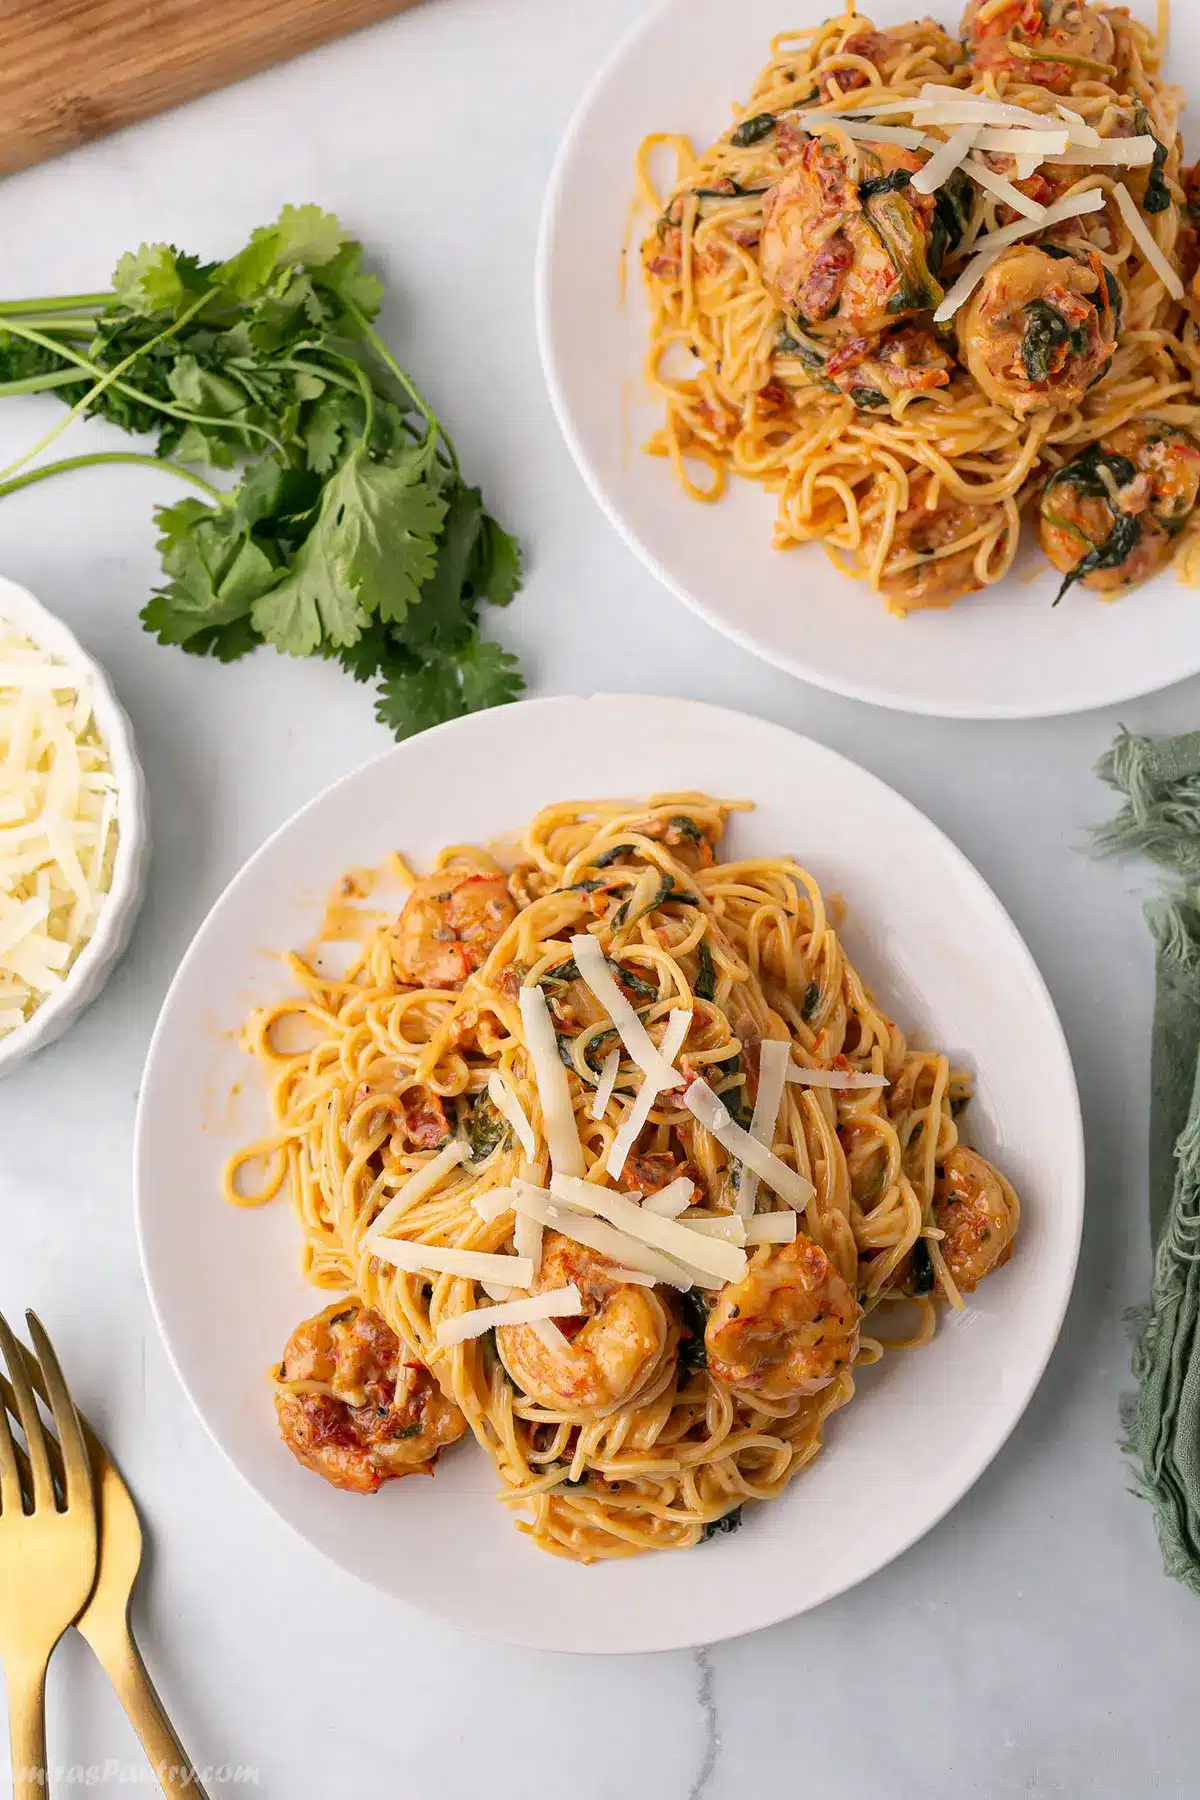 Tuscan shrimp pasta servings on white dishes.